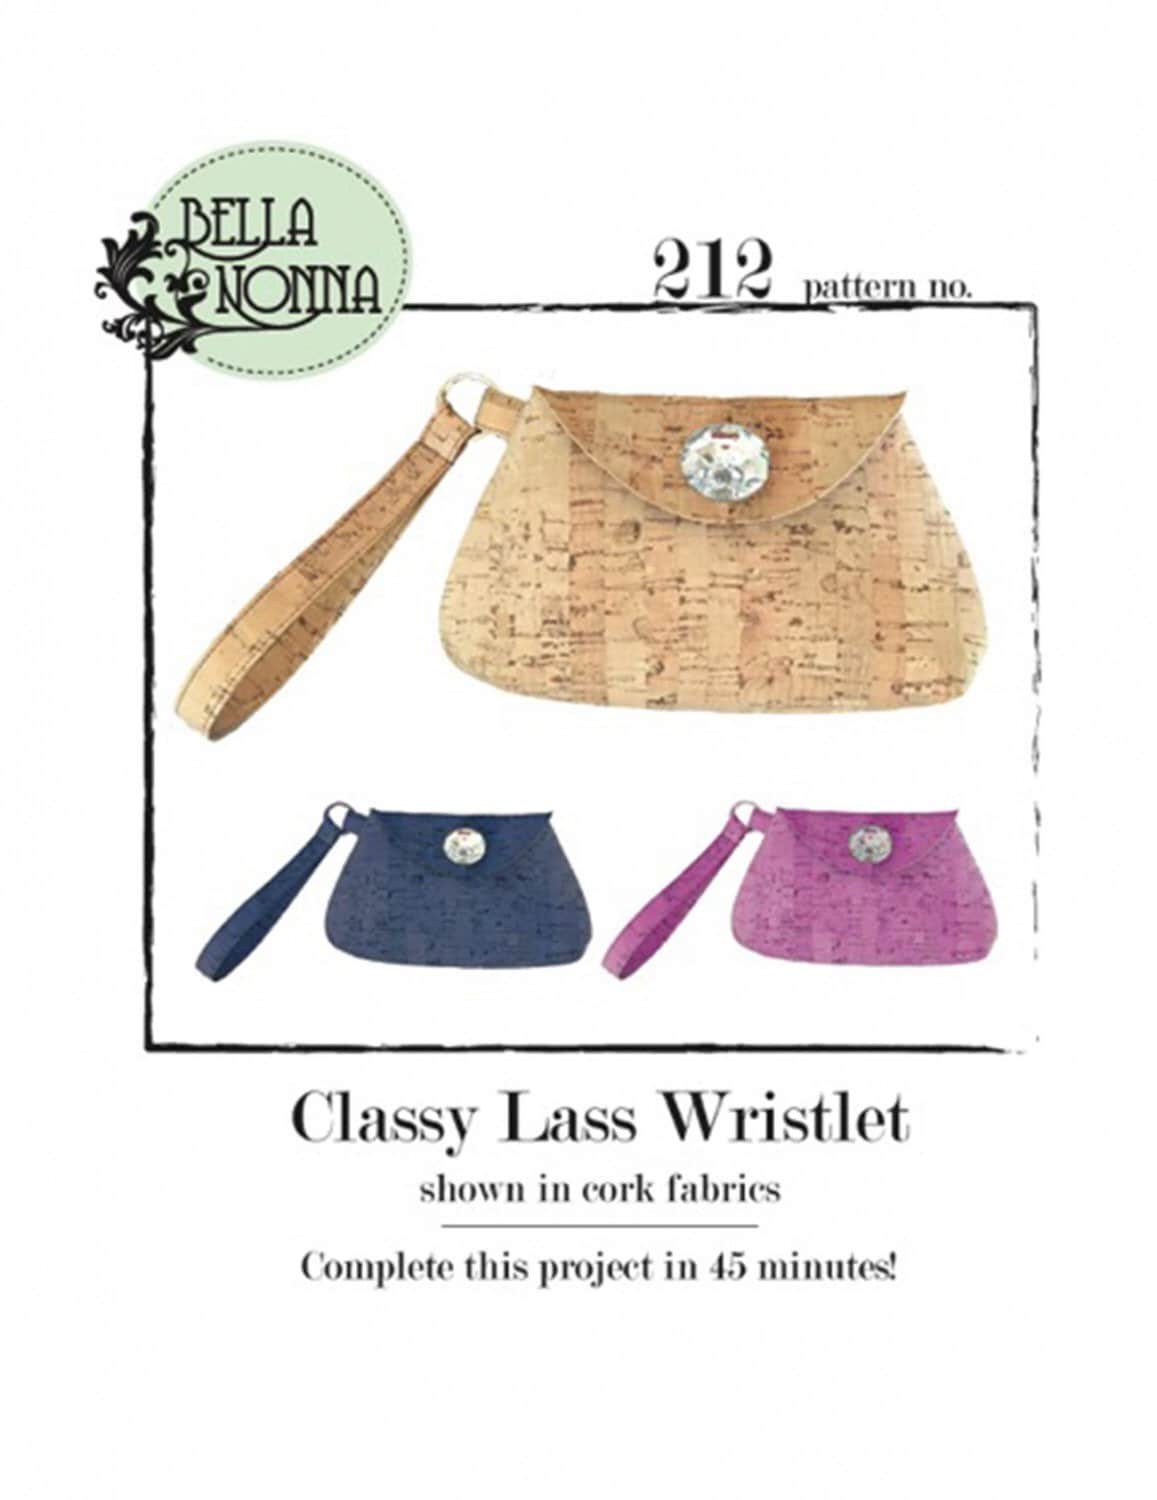 Classy Lass Wristlet Pattern - Bella Nonna - Cork Fabric Pattern